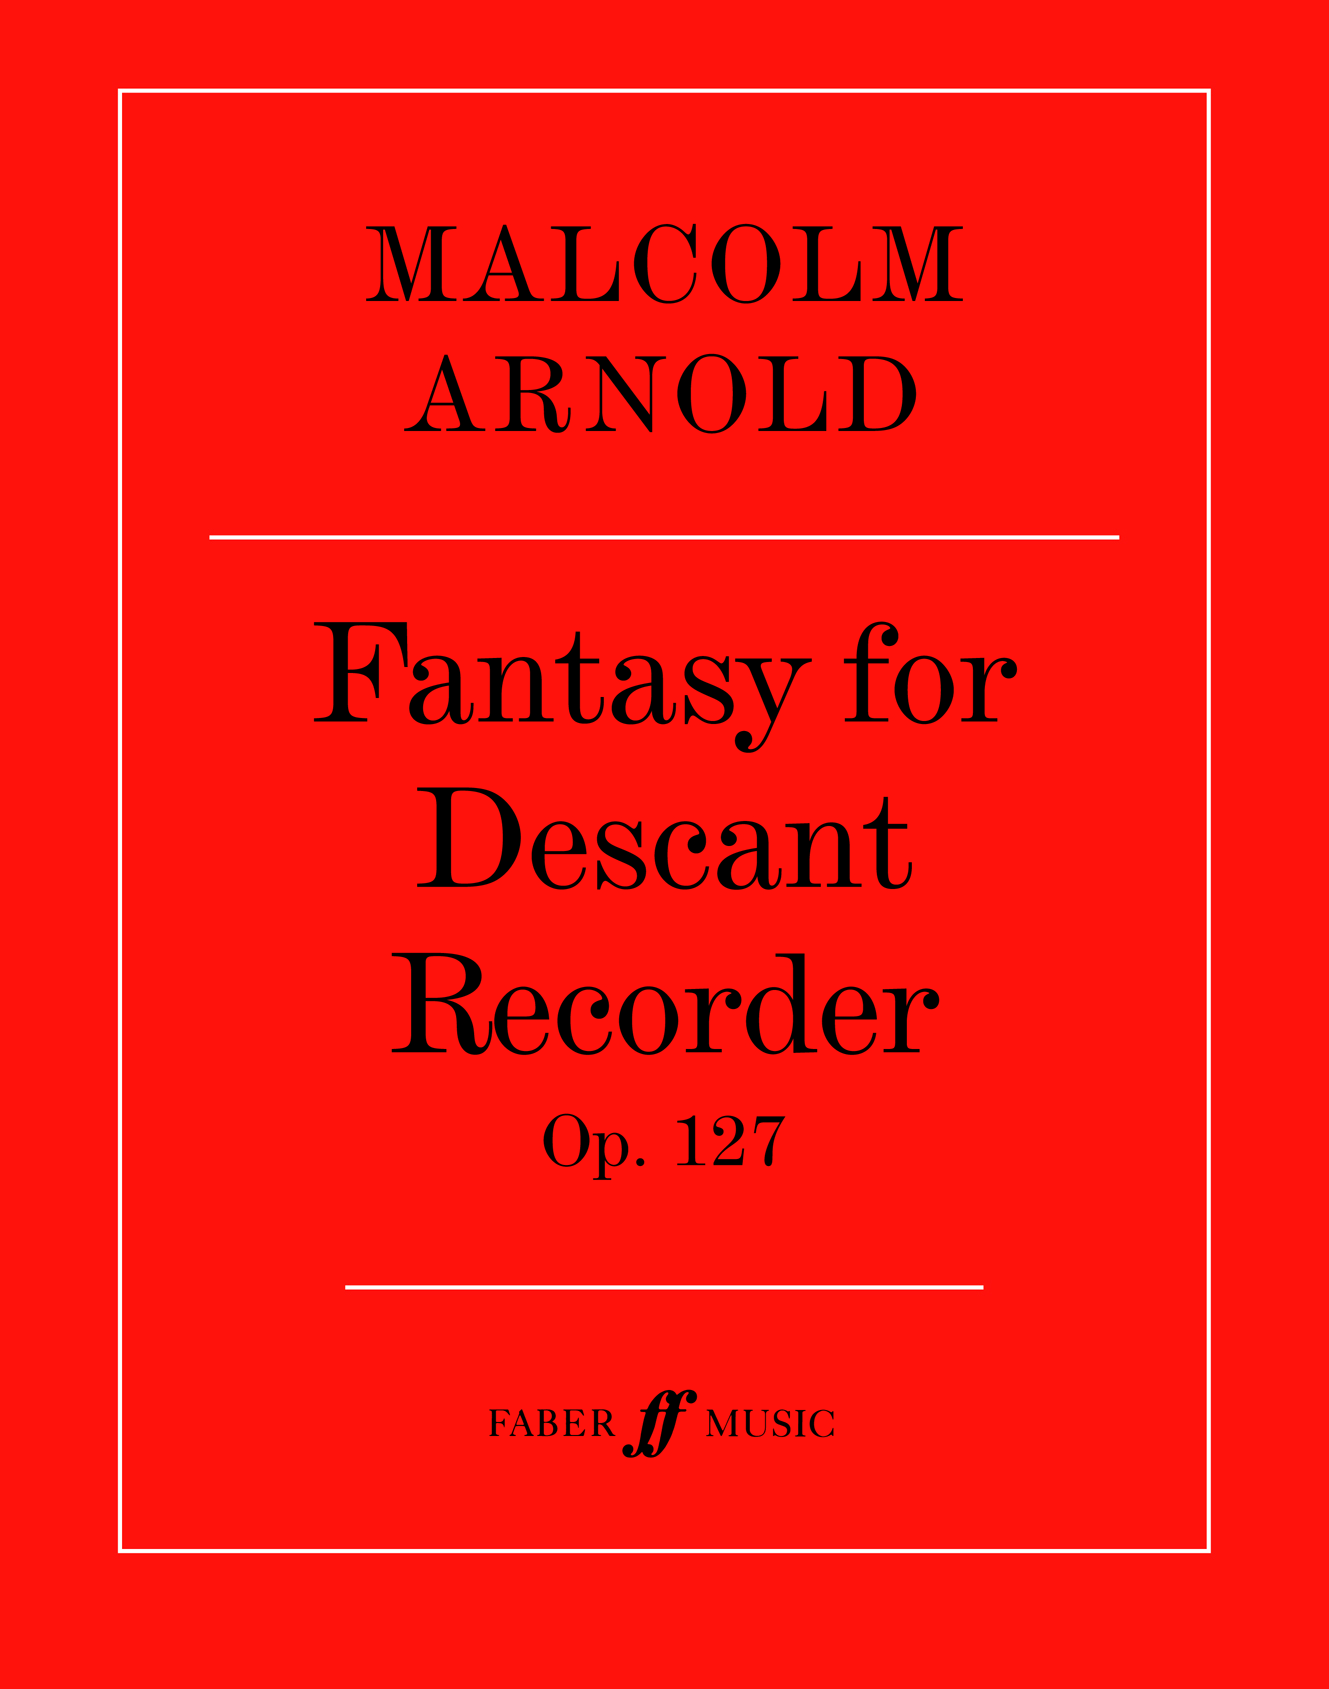 Fantasy for Descant Recorder (ARNOLD MALCOLM)